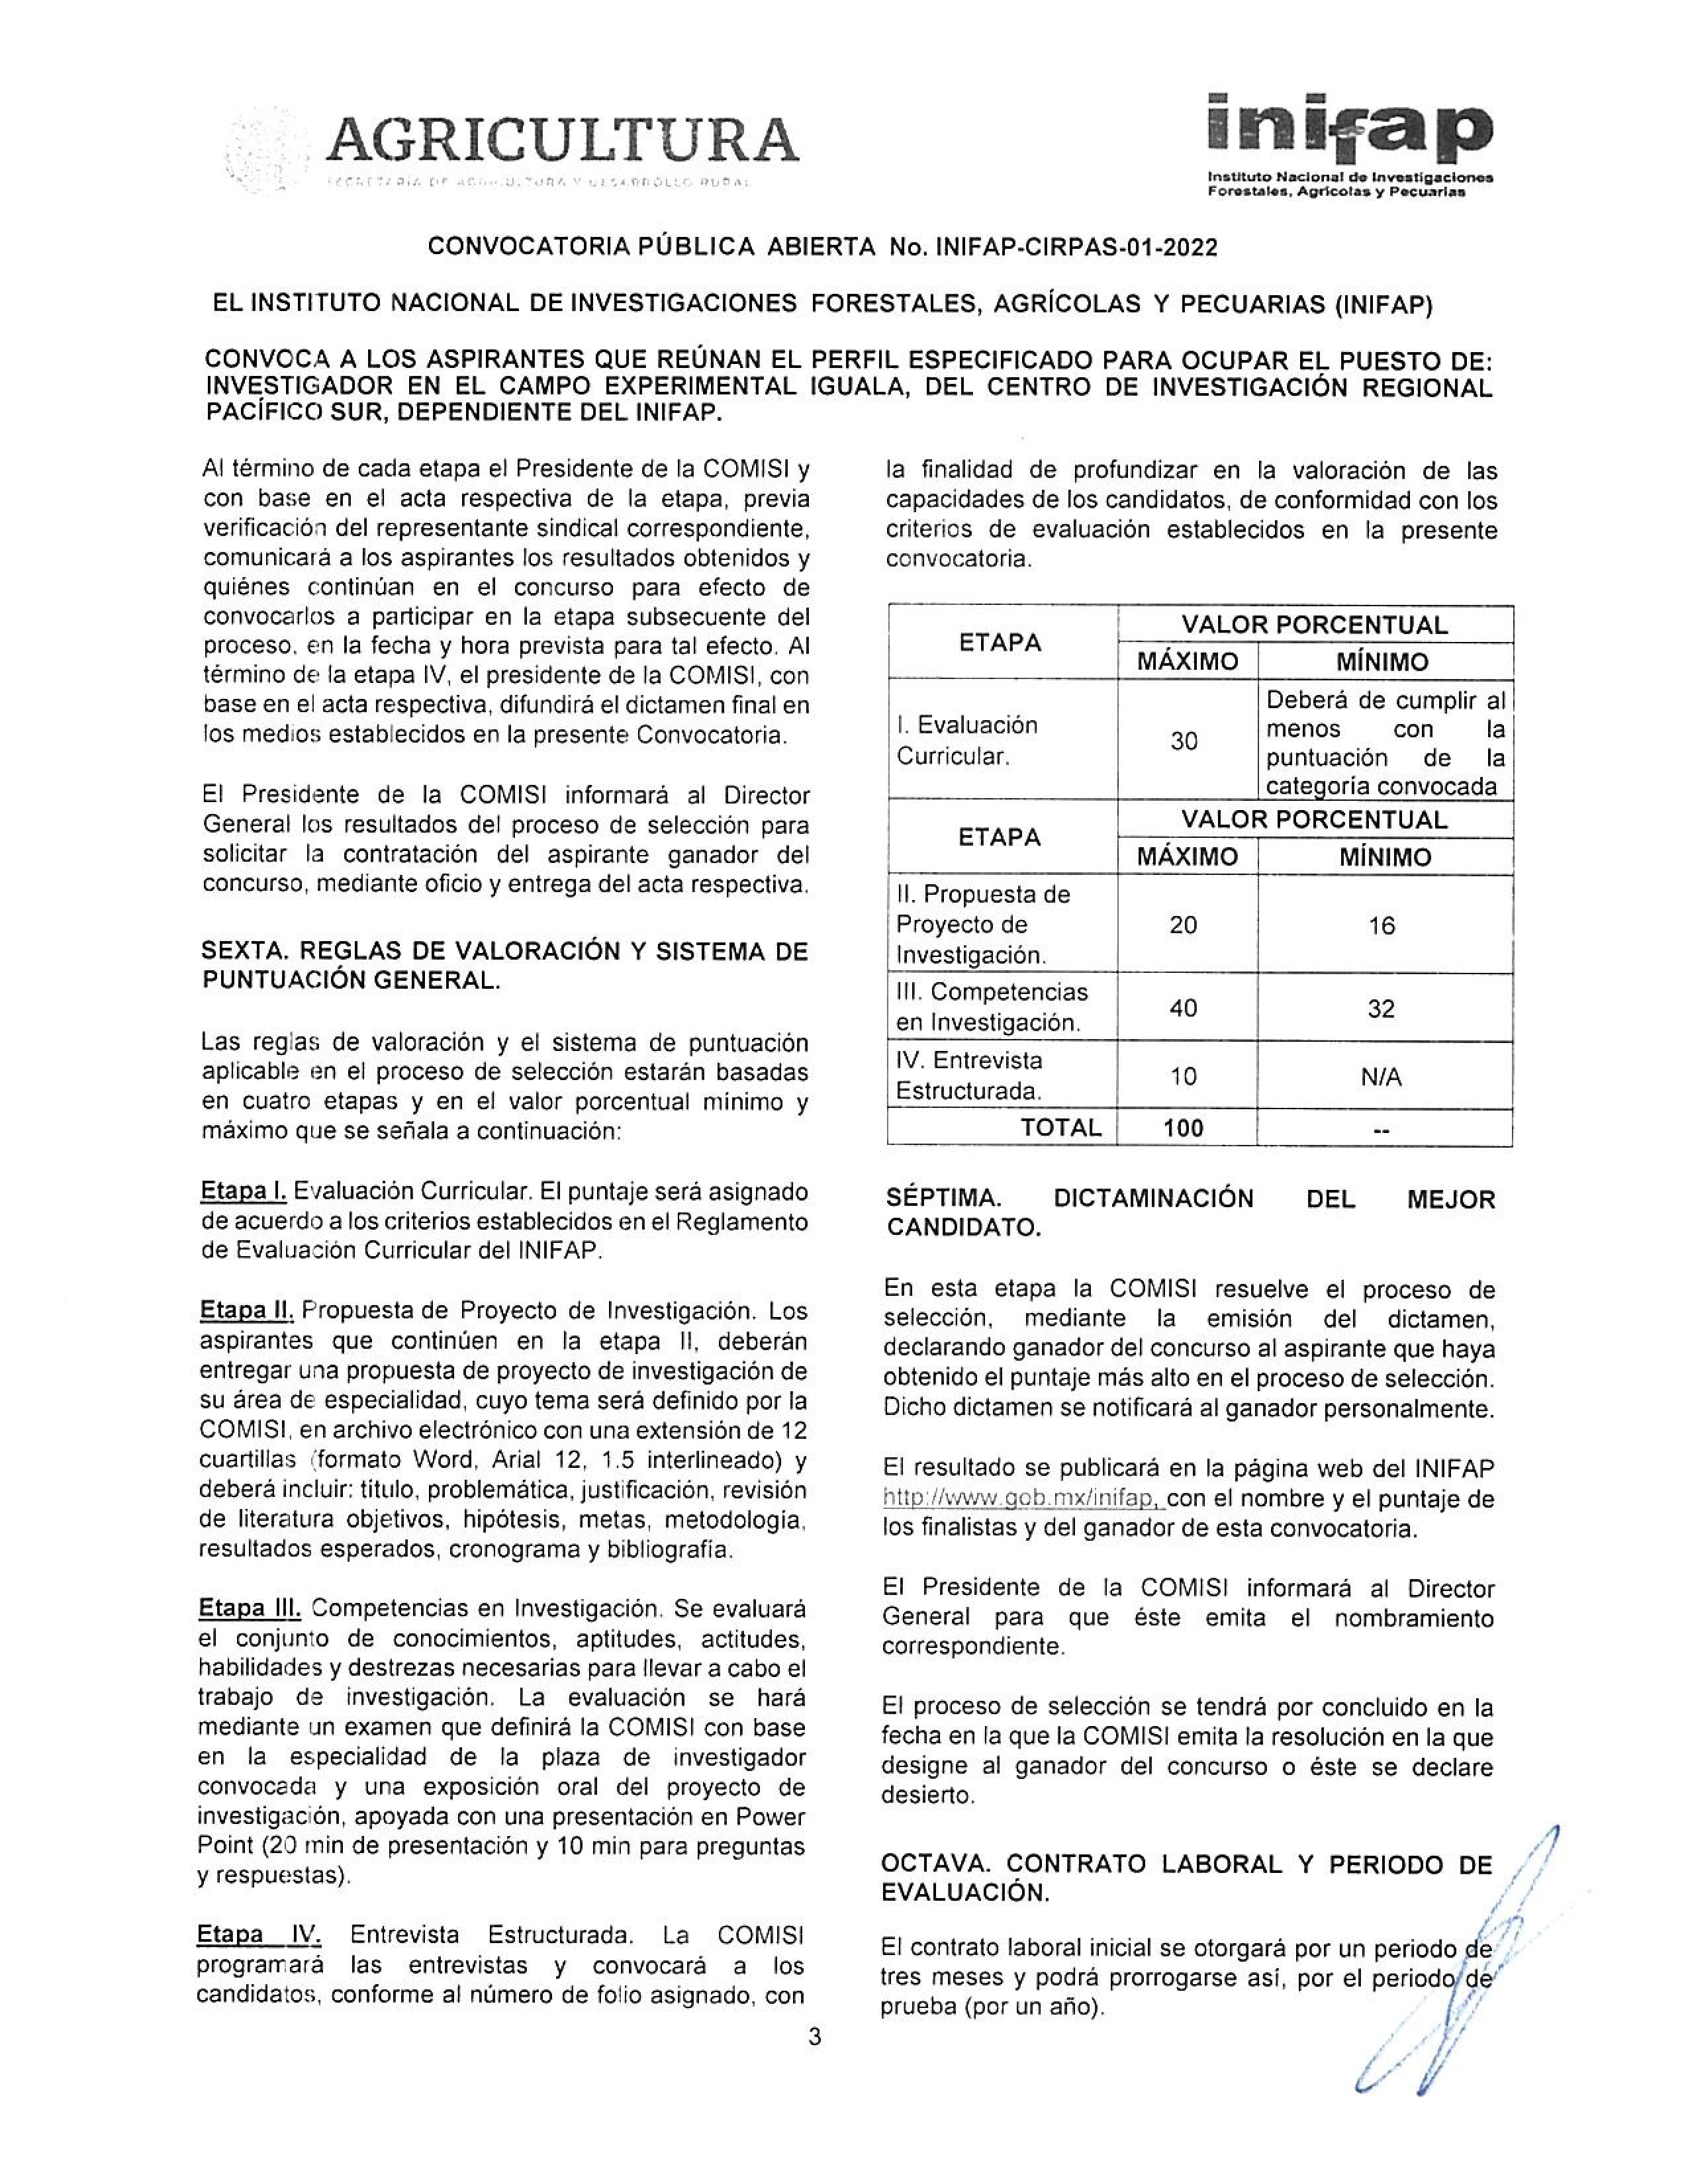 CONVOCATORIA PUBLICA ABIERTA NO. INIFAP-CIRPAS-01-2022 PAG.3